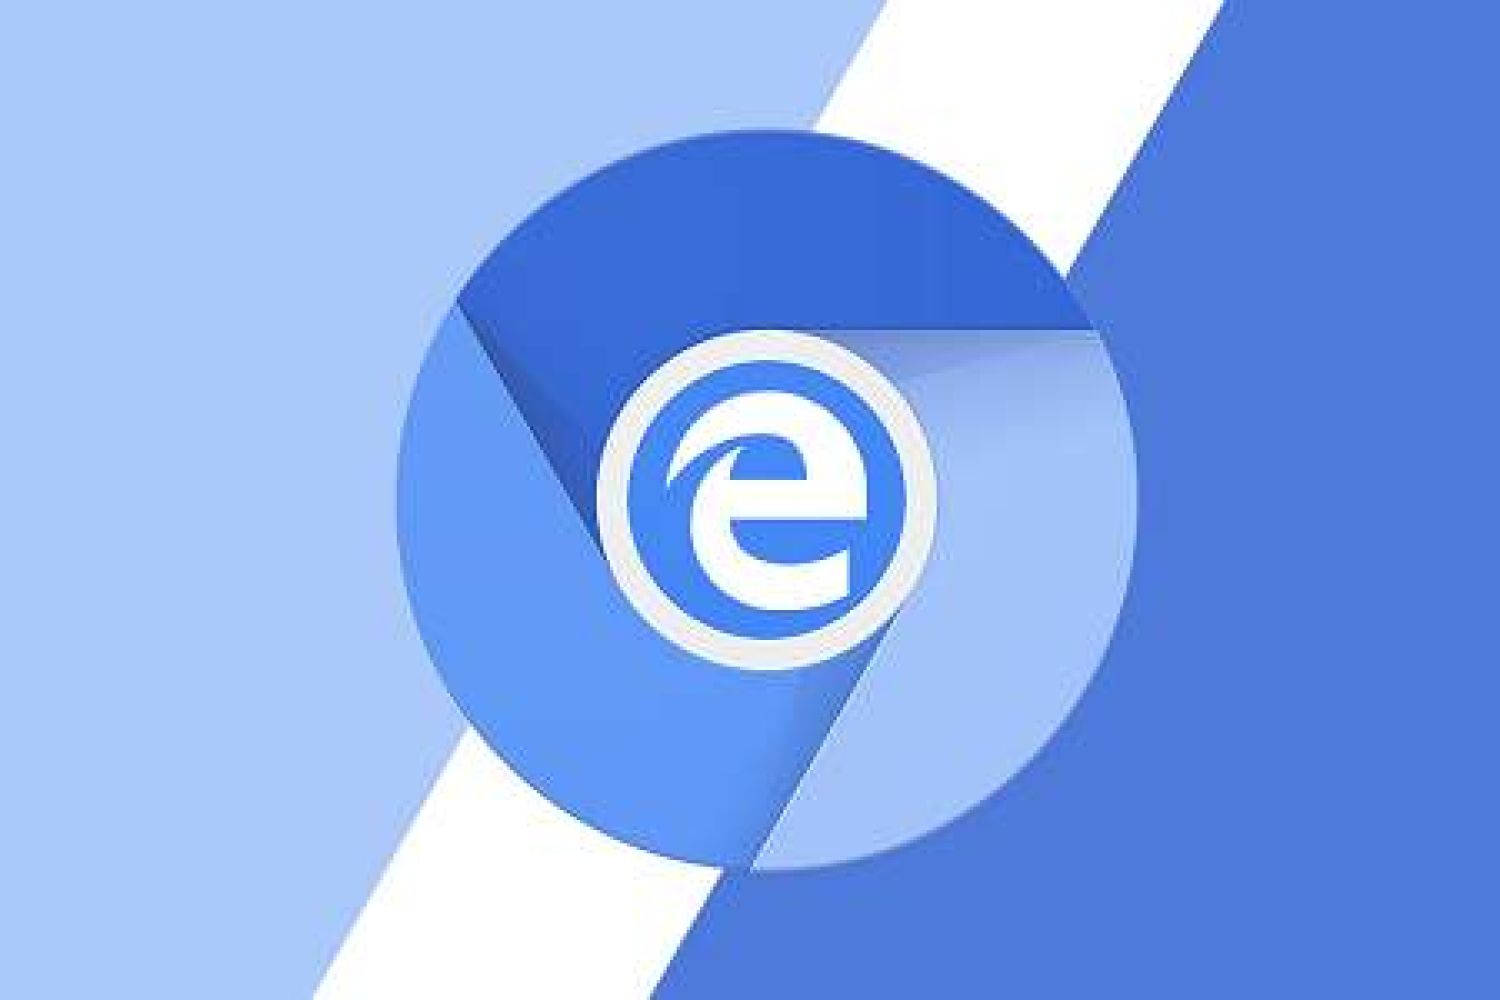 edge浏览器便携版-edge浏览器下载 v81.0.416.72 免费版 - 安下载